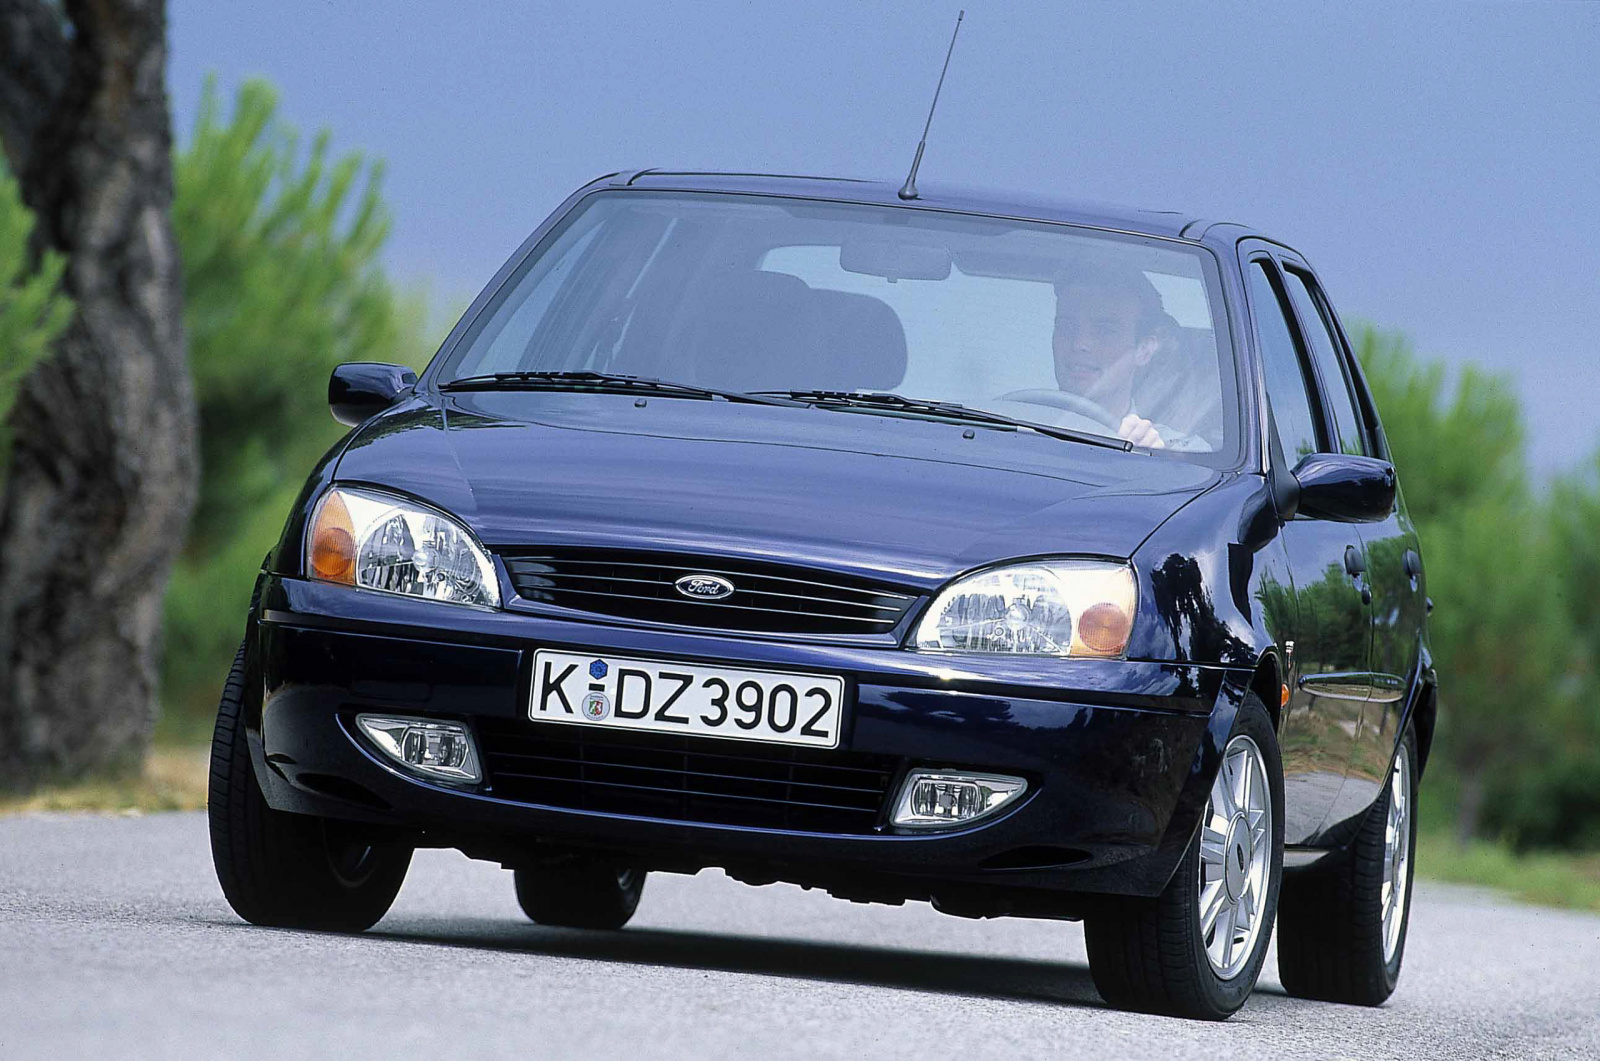 Ford Fiesta (1999) - Foto eines Ford PKW-Modells